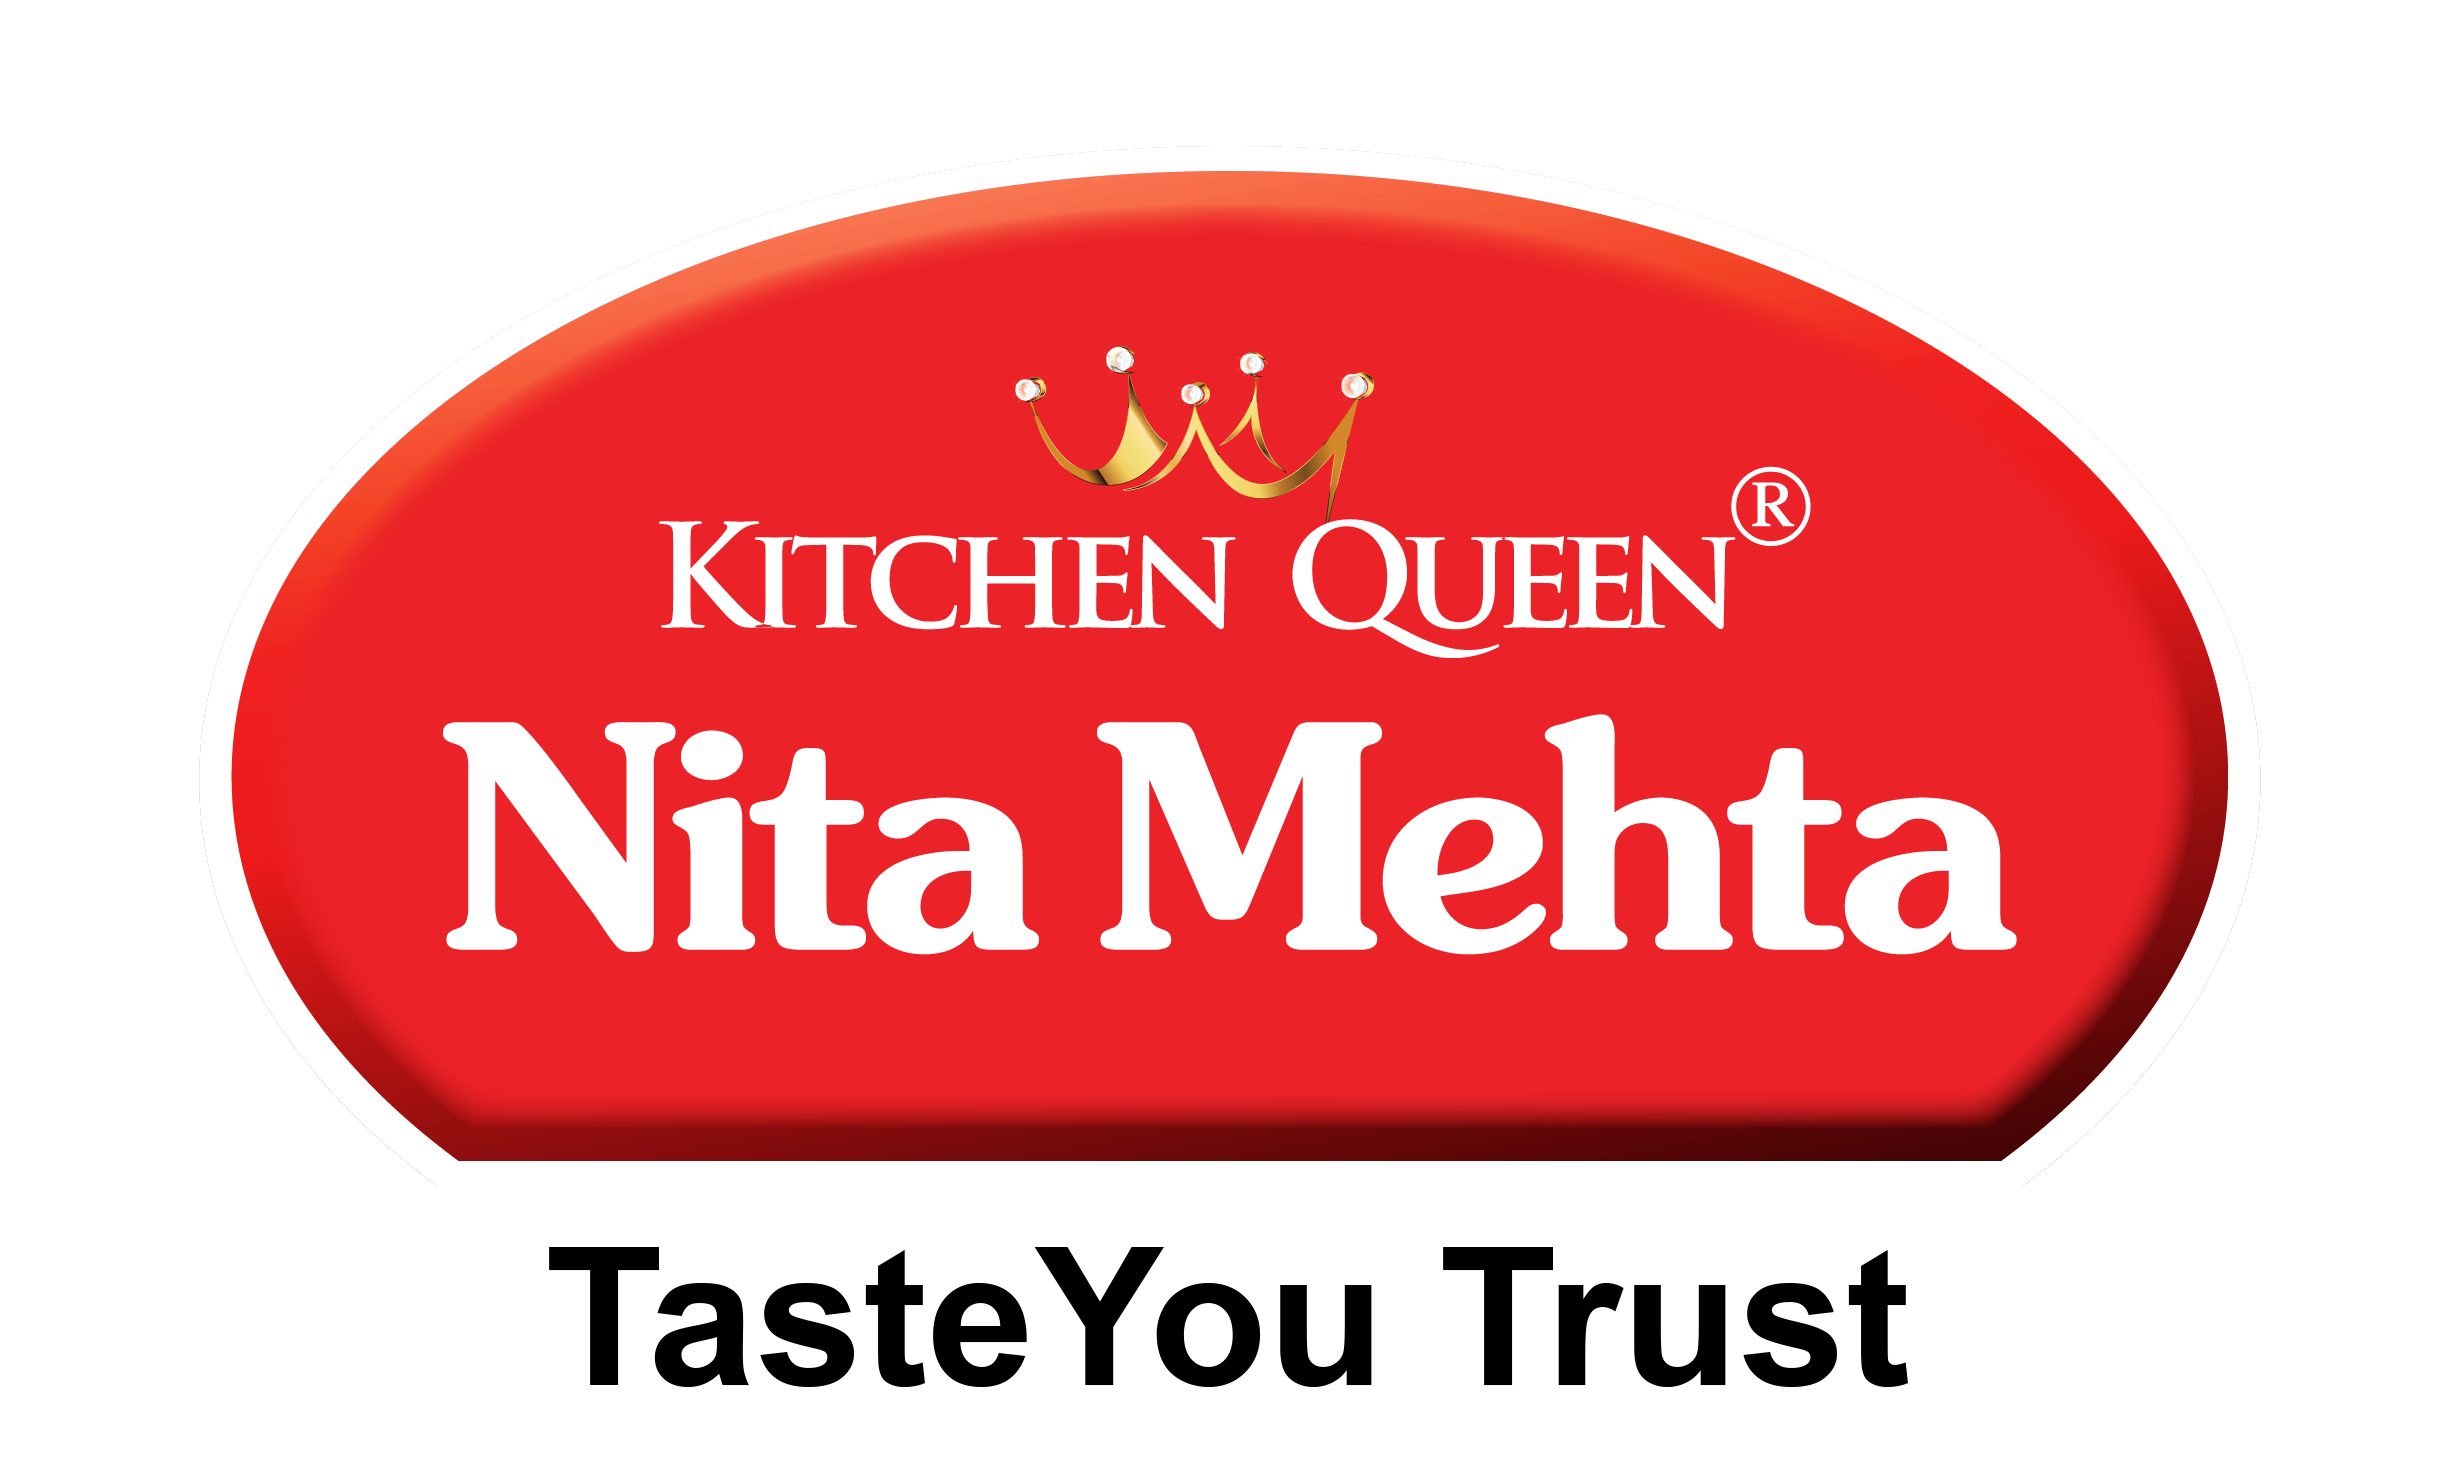 Nita Mehta